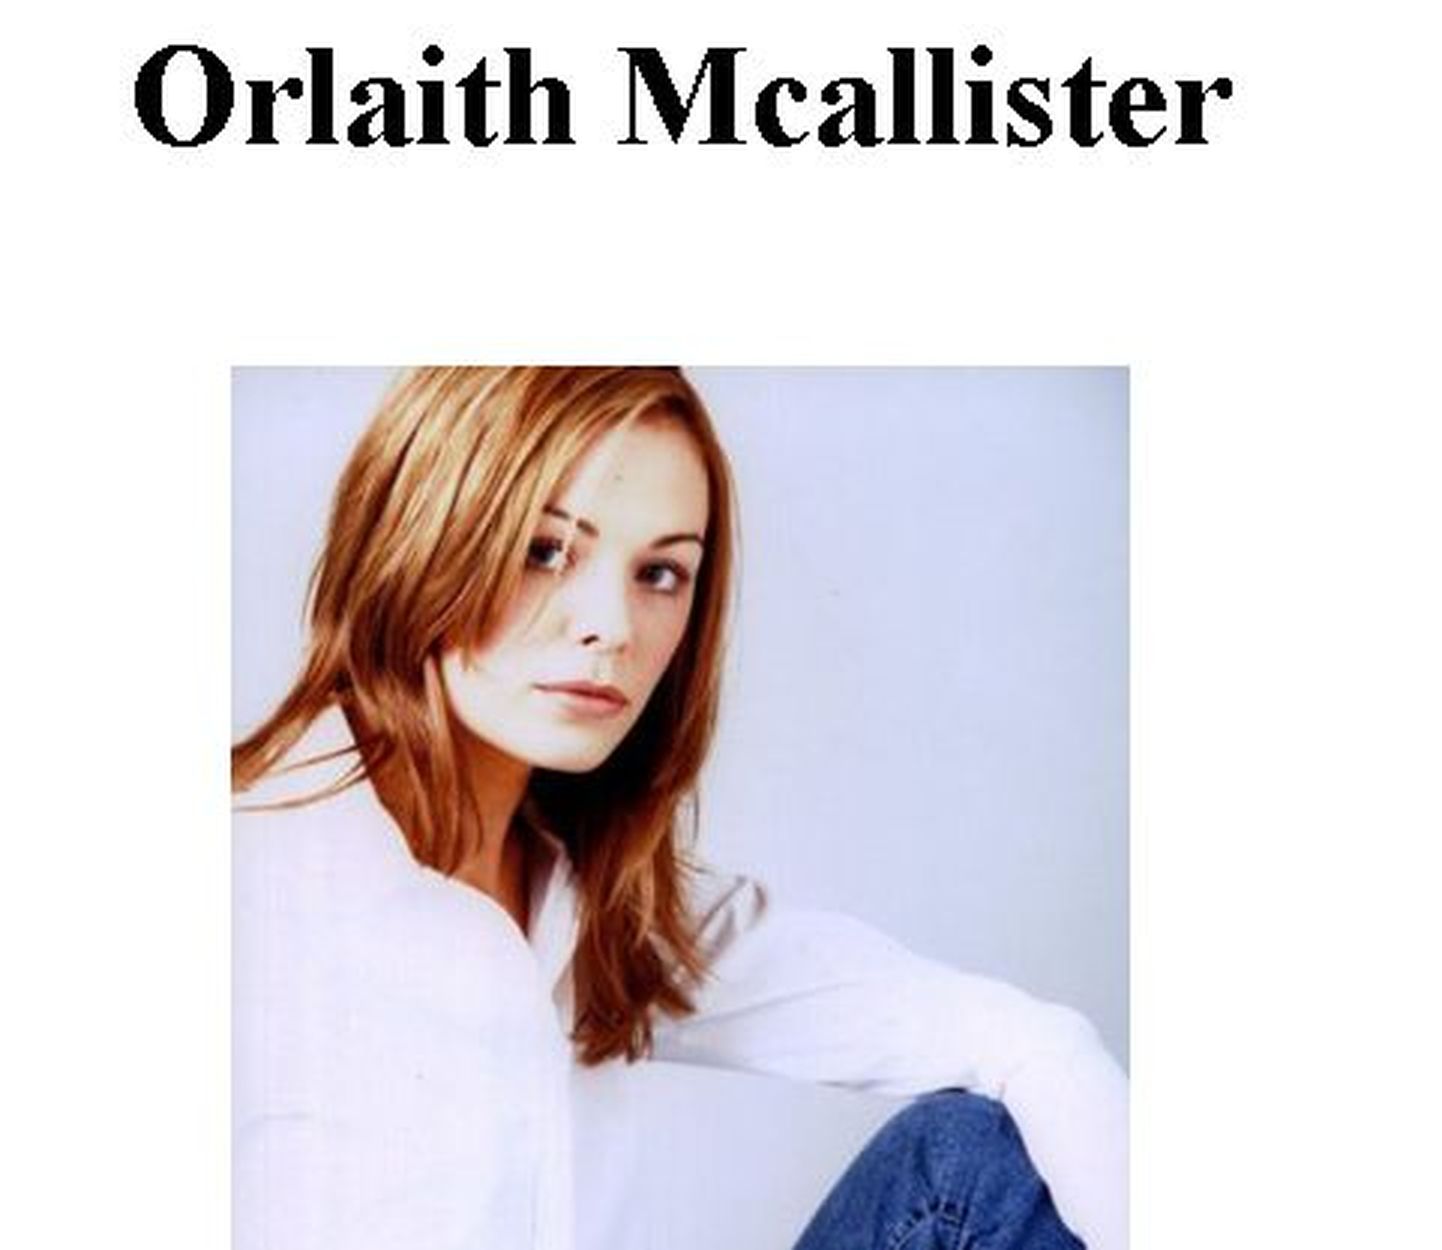 Pilt Orlaith McAllisteri kodulehelt